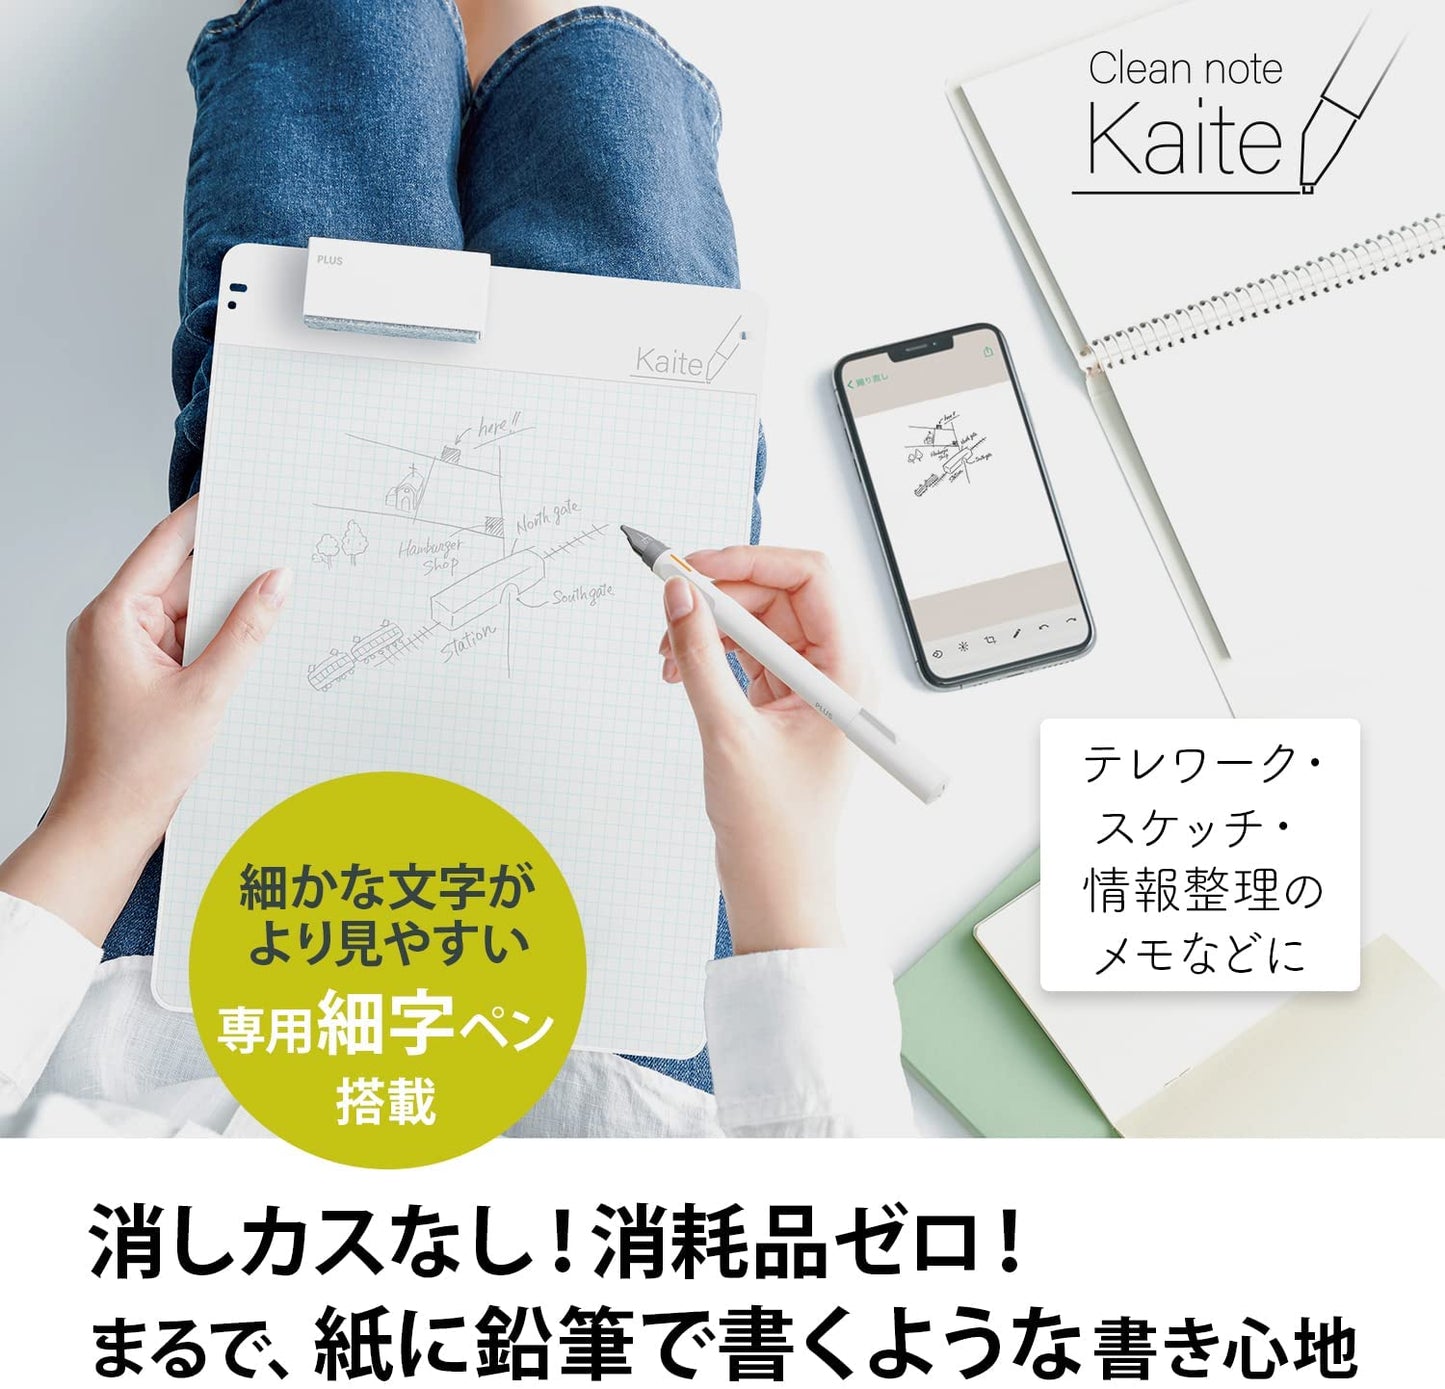 Kaite 2S 13.3 Writing Slate with GRID